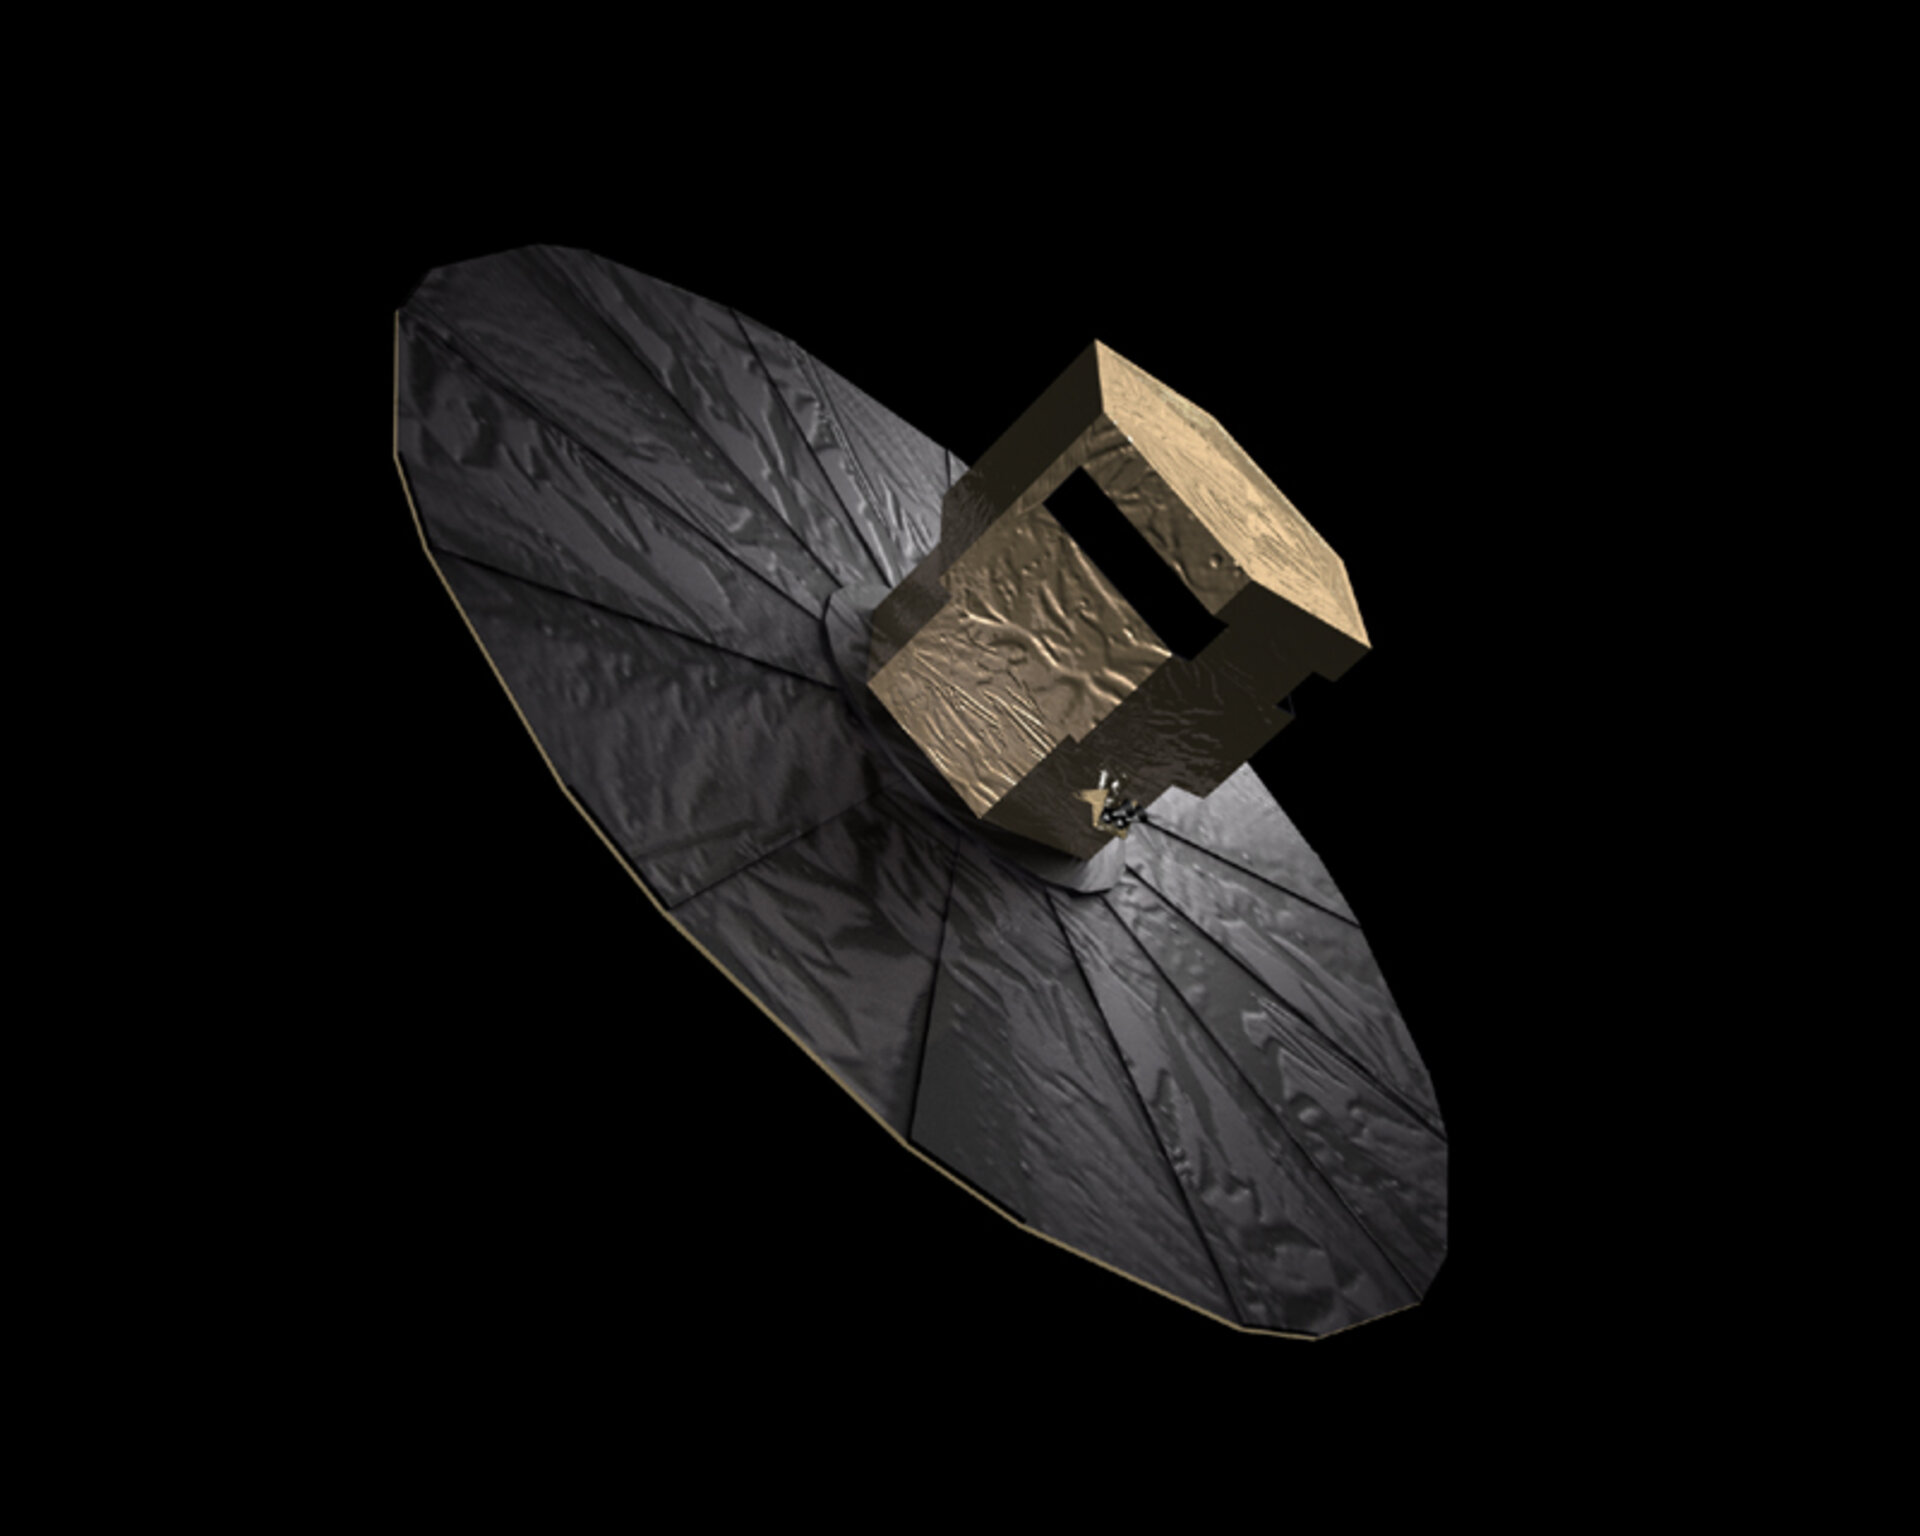 Gaia spacecraft on a black background